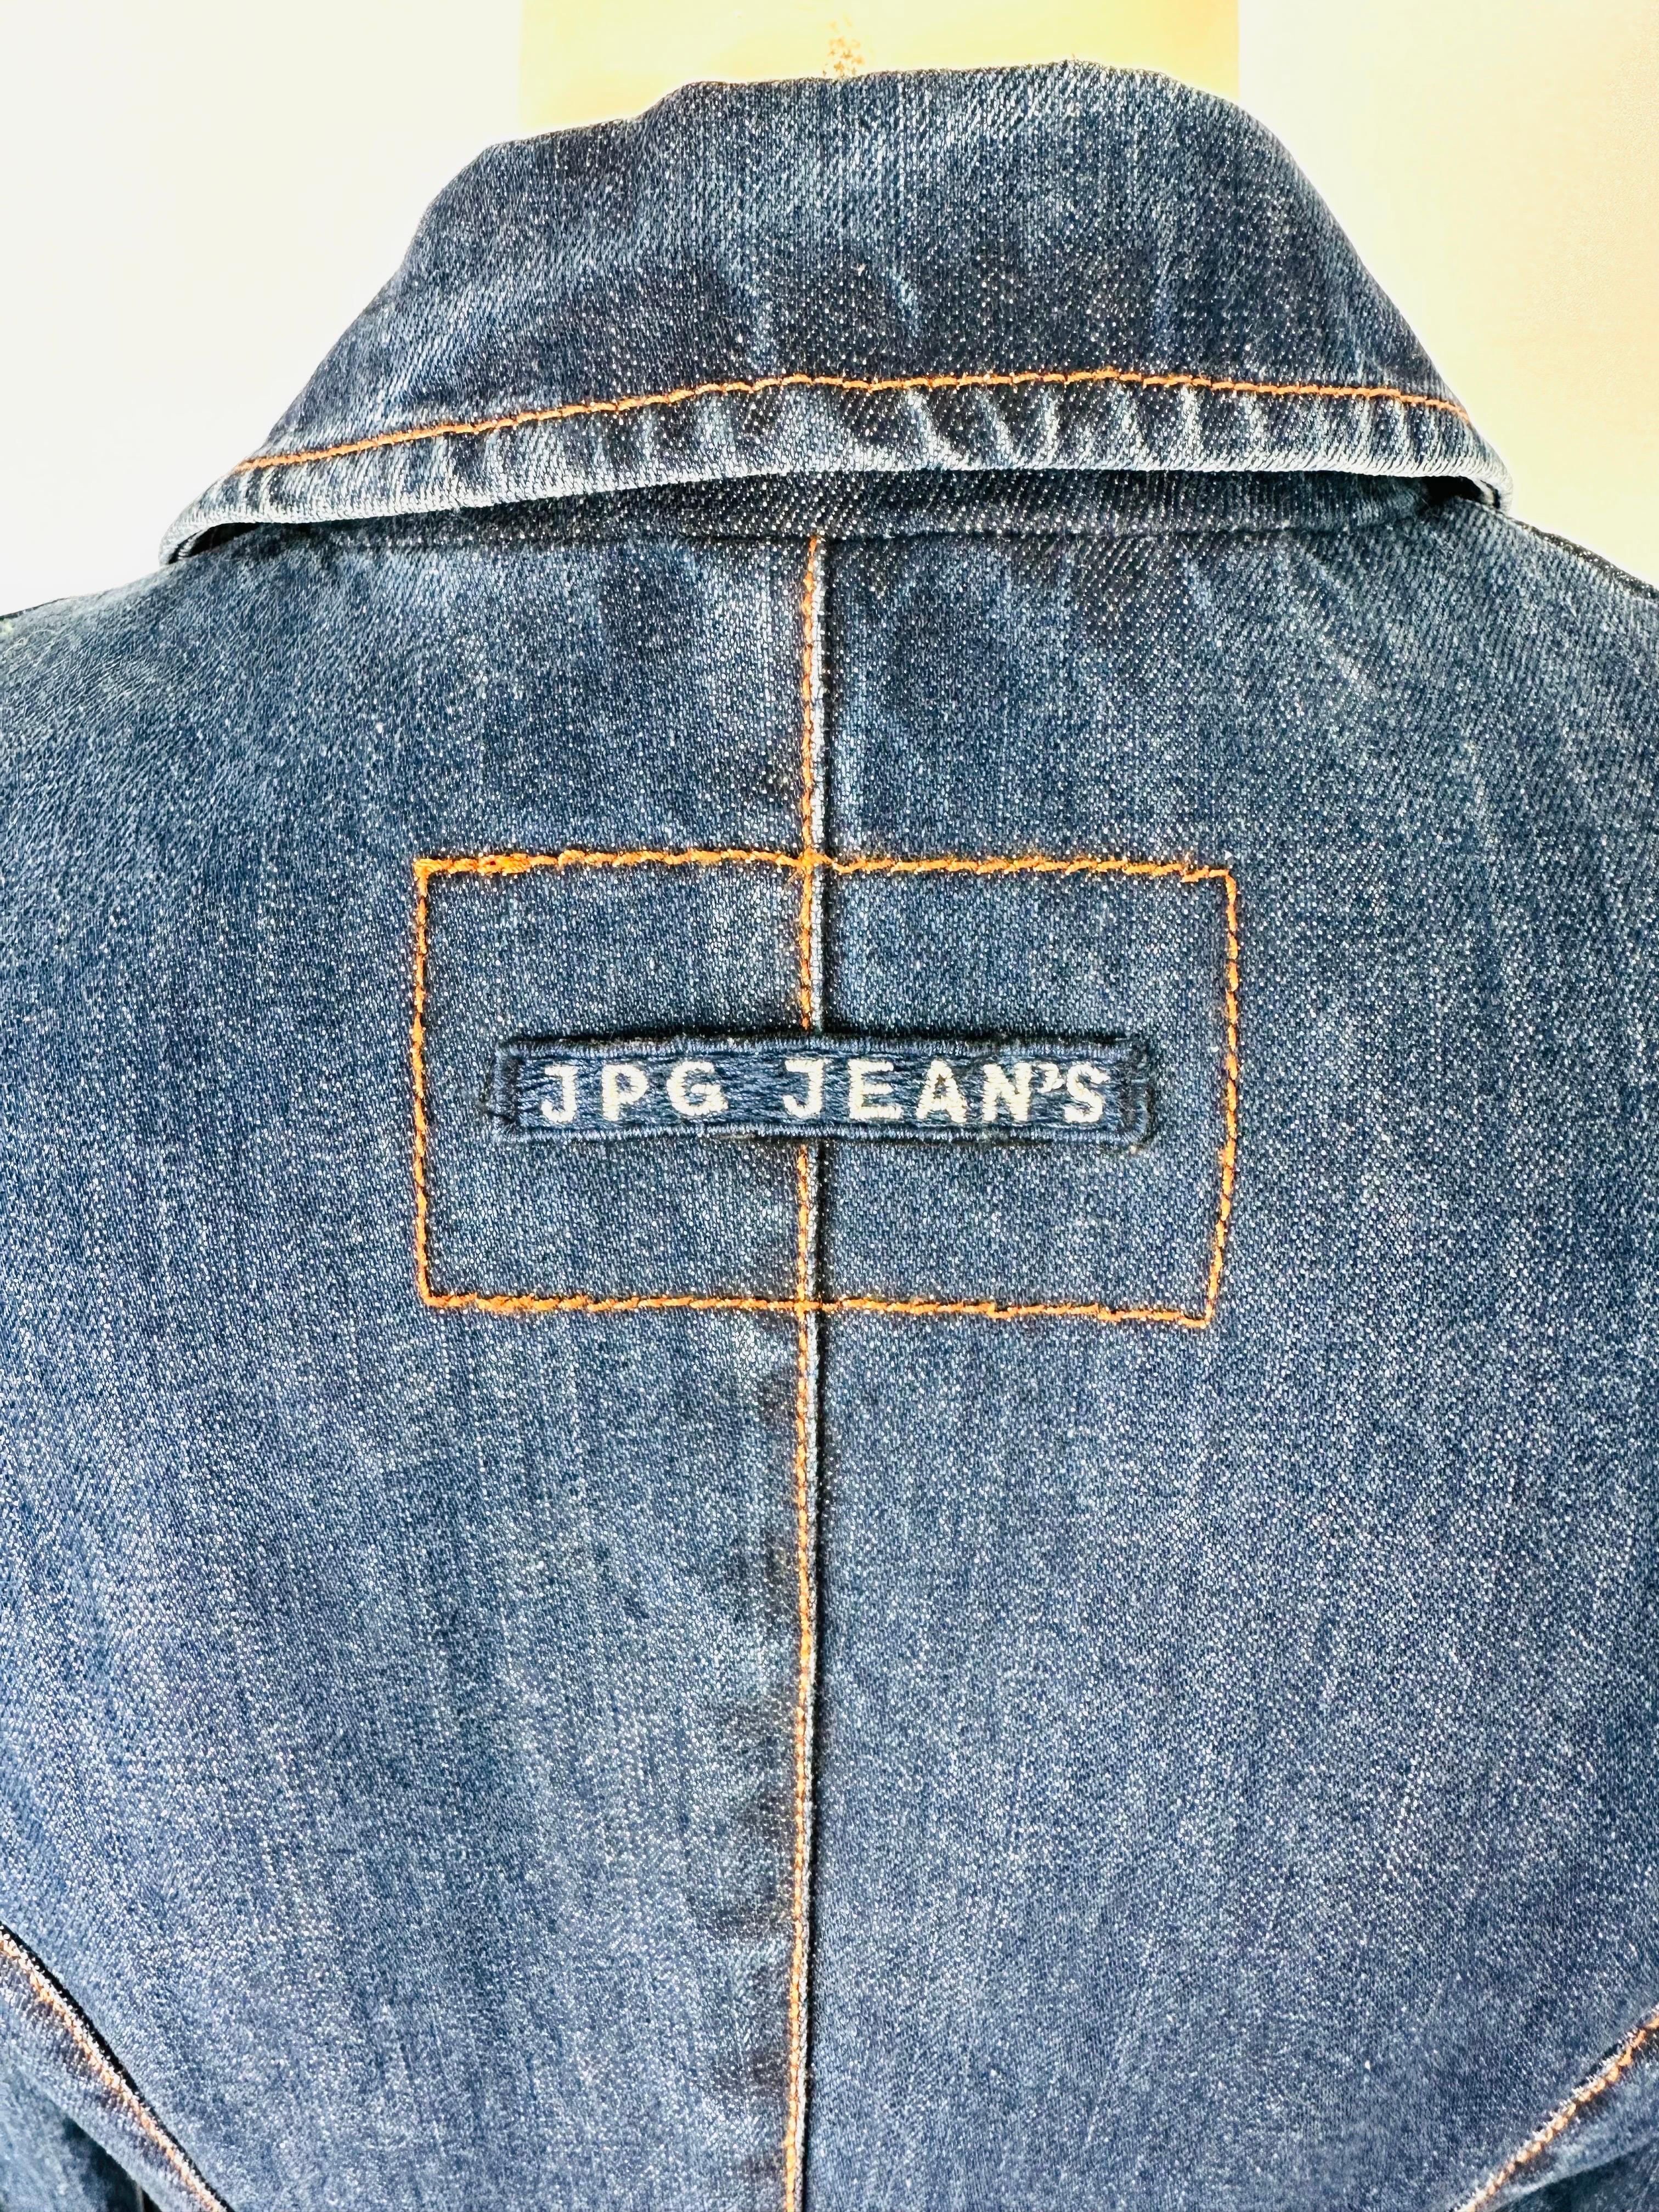 Jean Paul Gaultier vintage jeans tails jacket For Sale 6